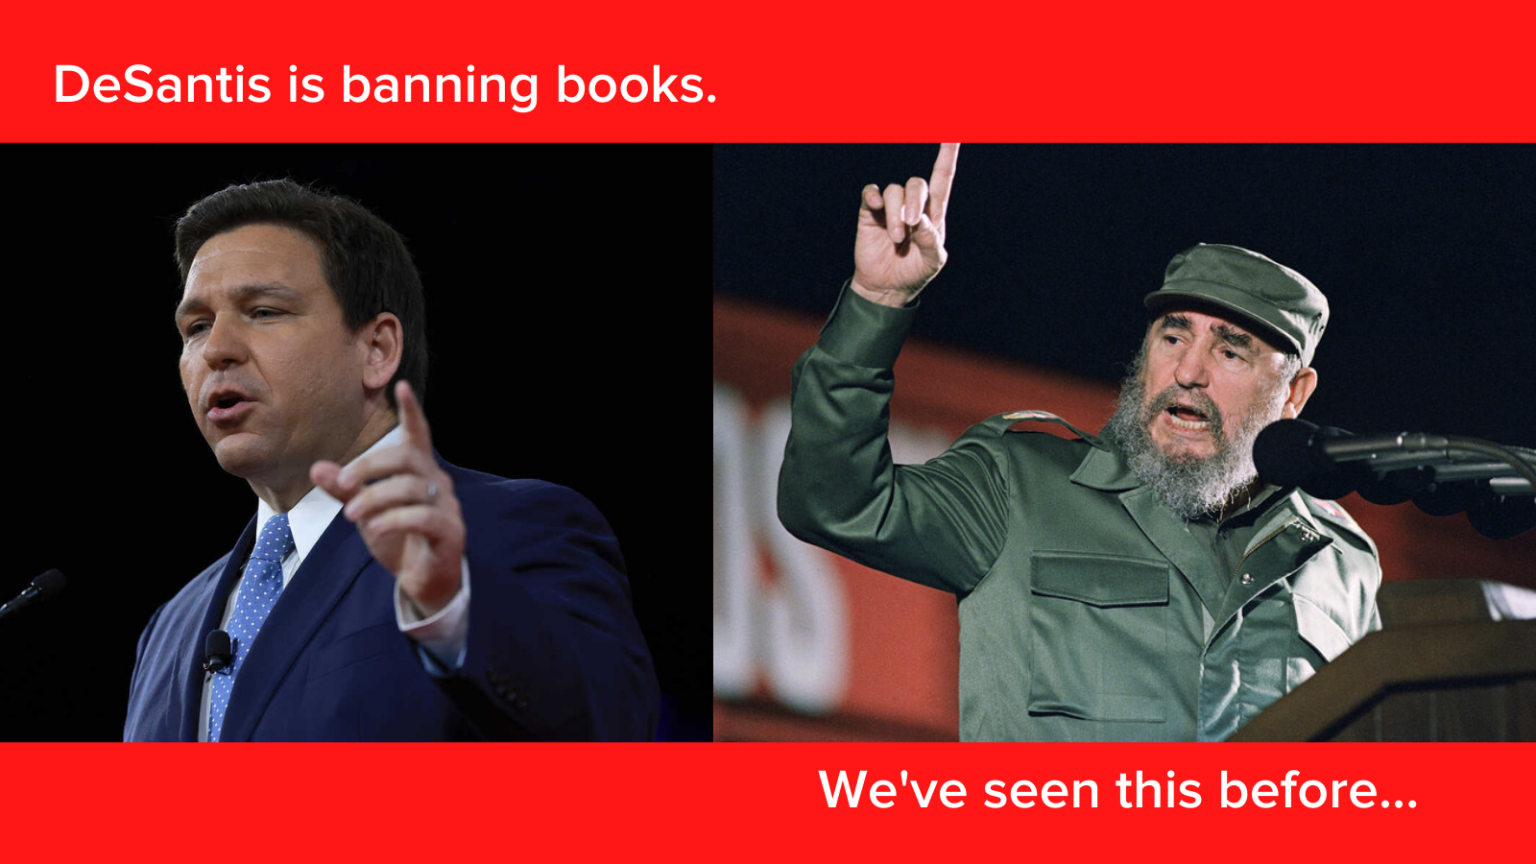 Castro와 같은 DeSantis는 책을 금지하고 있습니다.